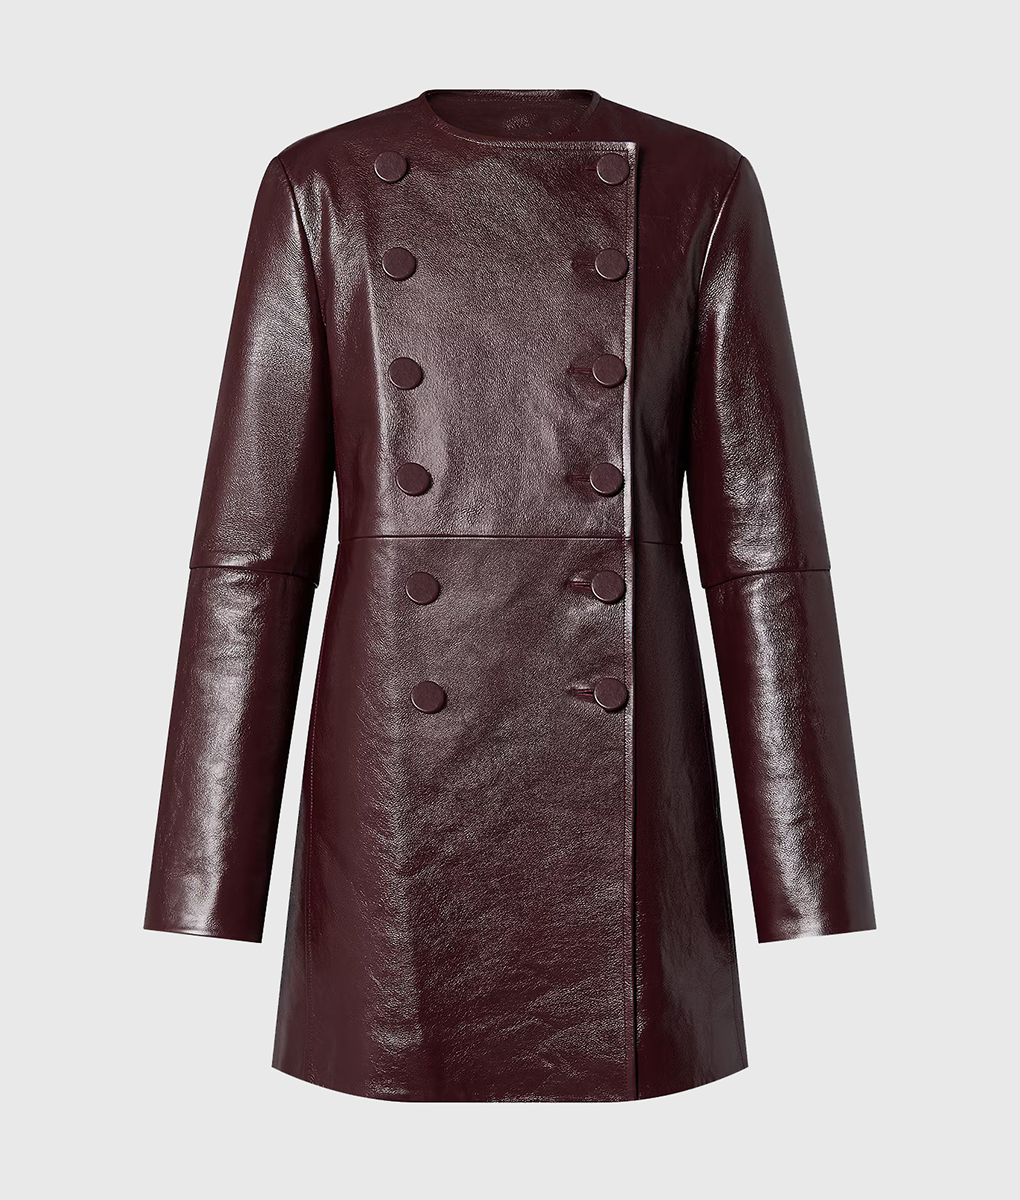 Hannah Einbinder Maroon Leather Coat (2)